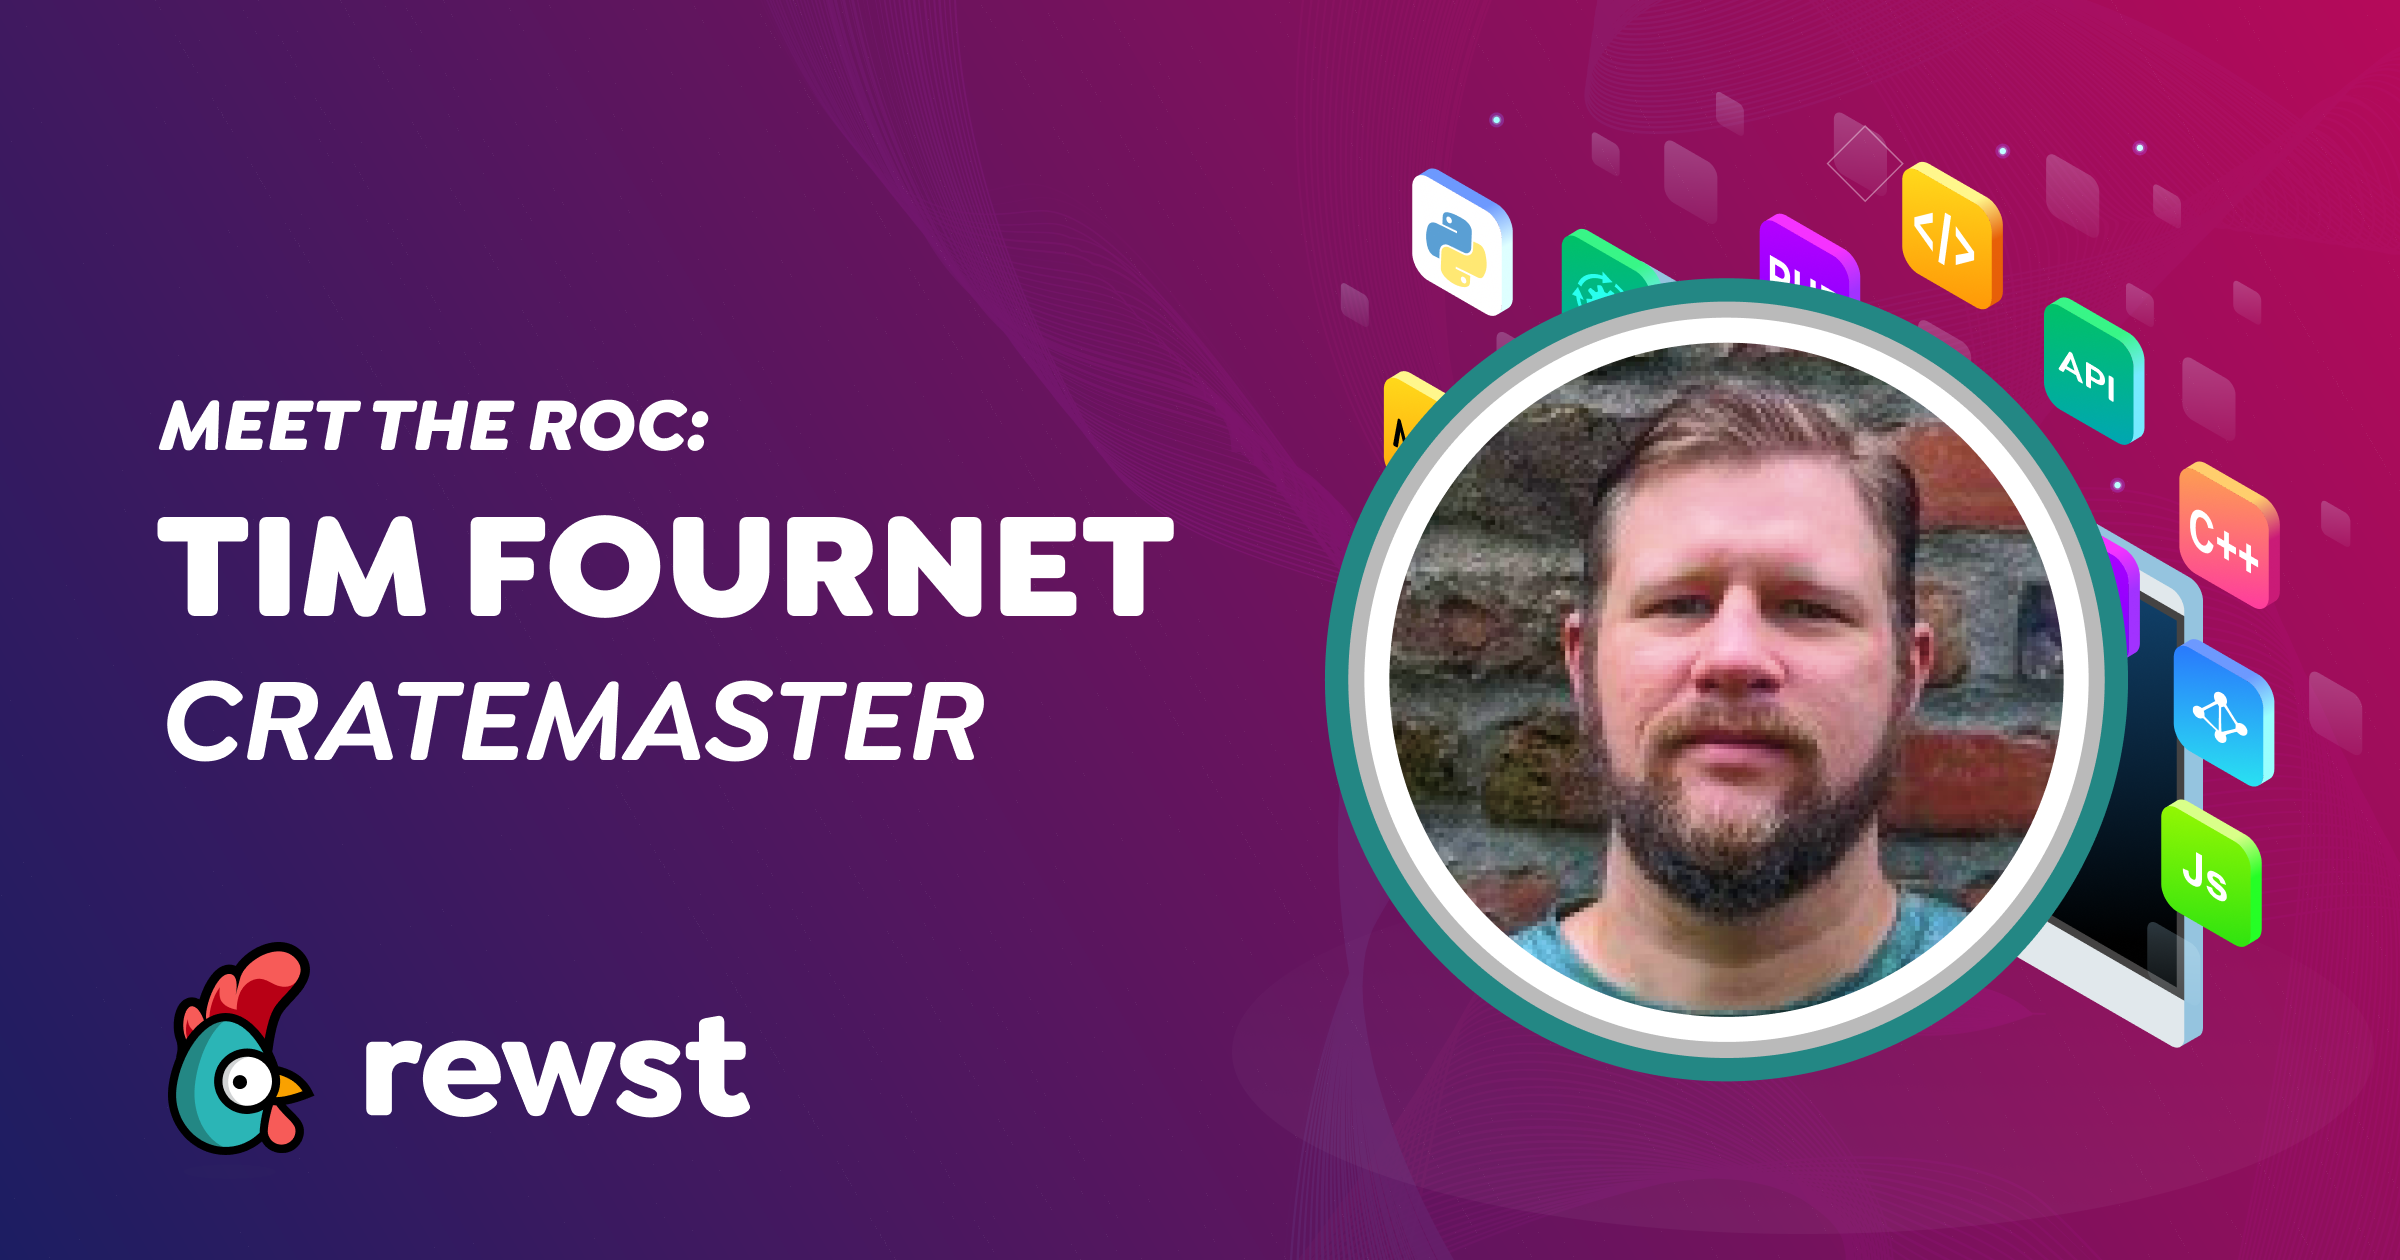 Meet the ROC: Tim Fournet, Cratemaster